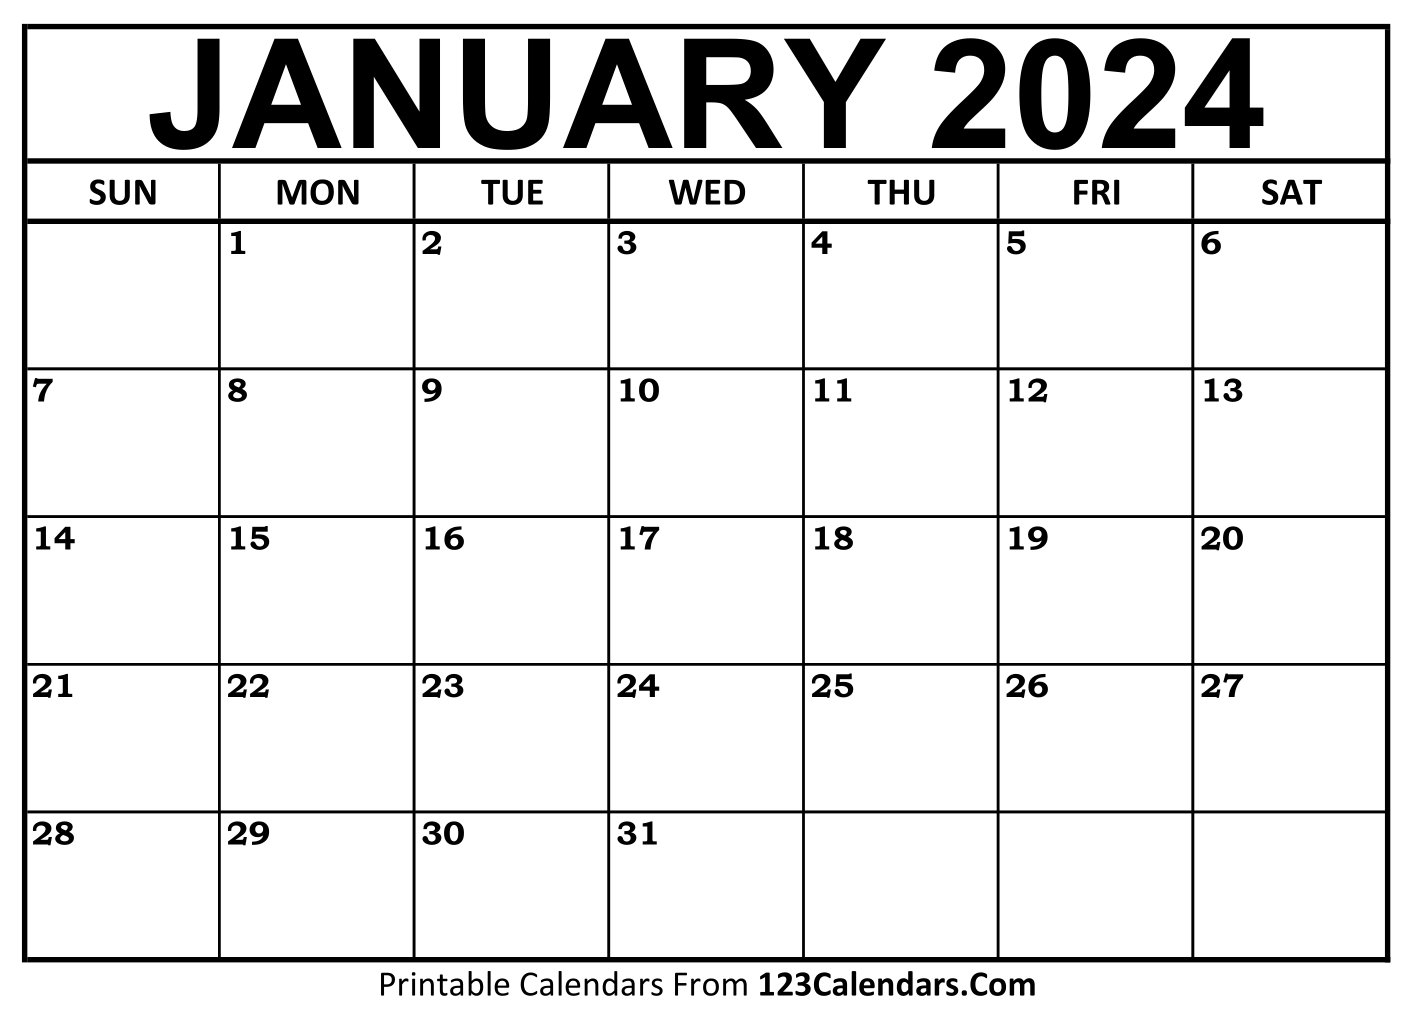 Printable January 2024 Calendar Templates - 123Calendars for Free Jan 2024 Calendar Printable